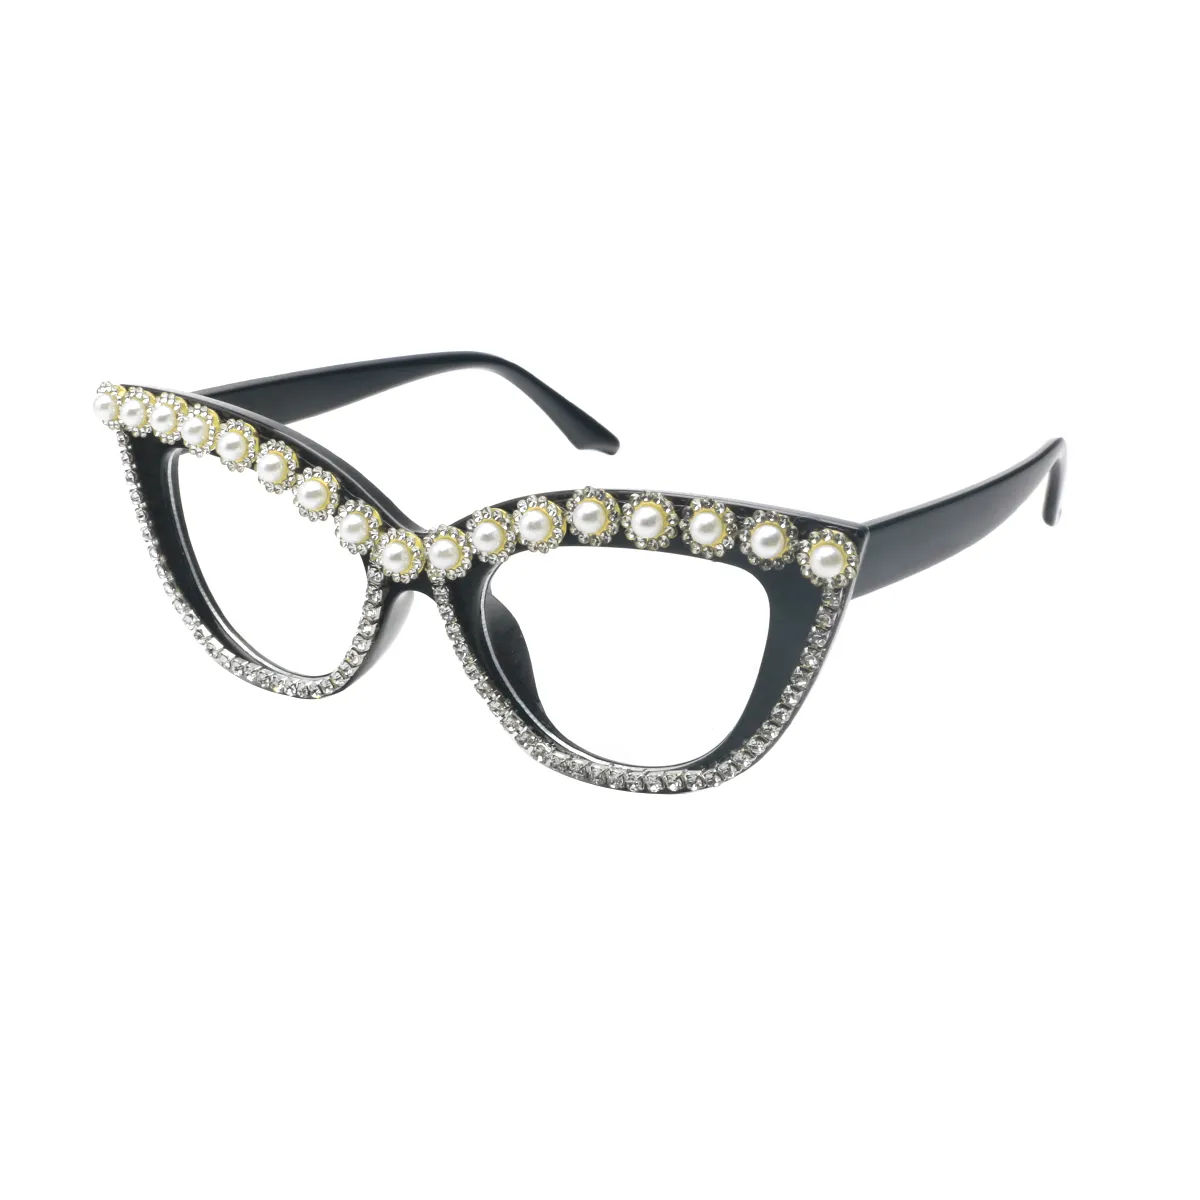 Fashion Cat-eye Black-Silver Eyeglasses for Women